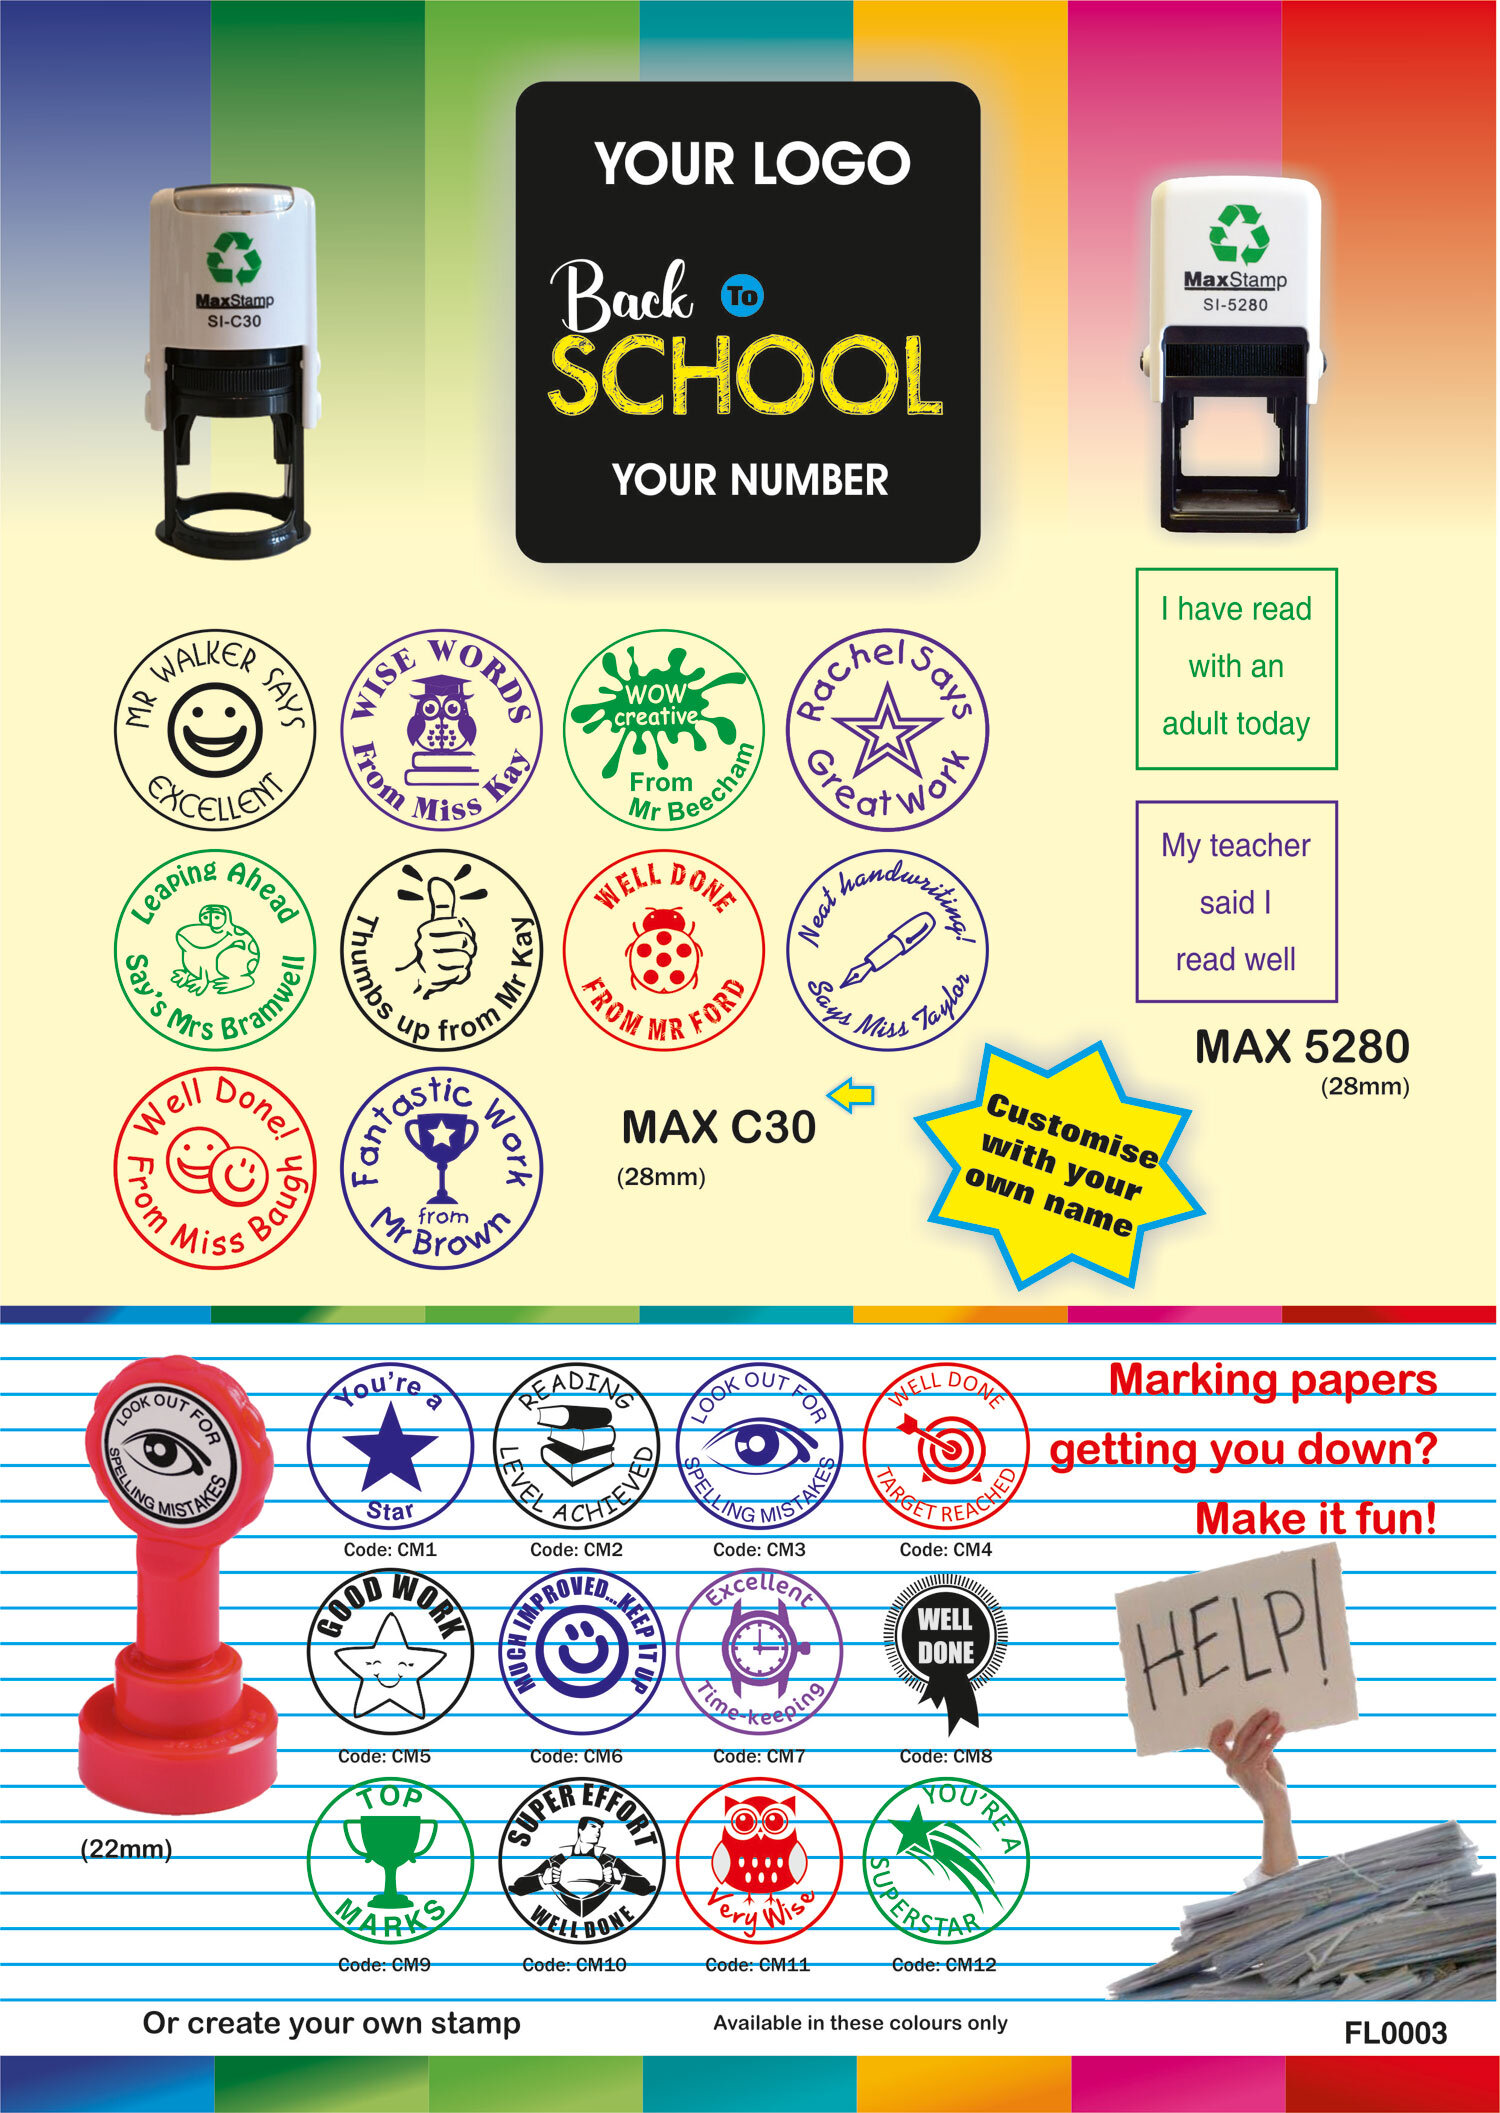 FL0003-SCHOOL-STAMPS.jpg